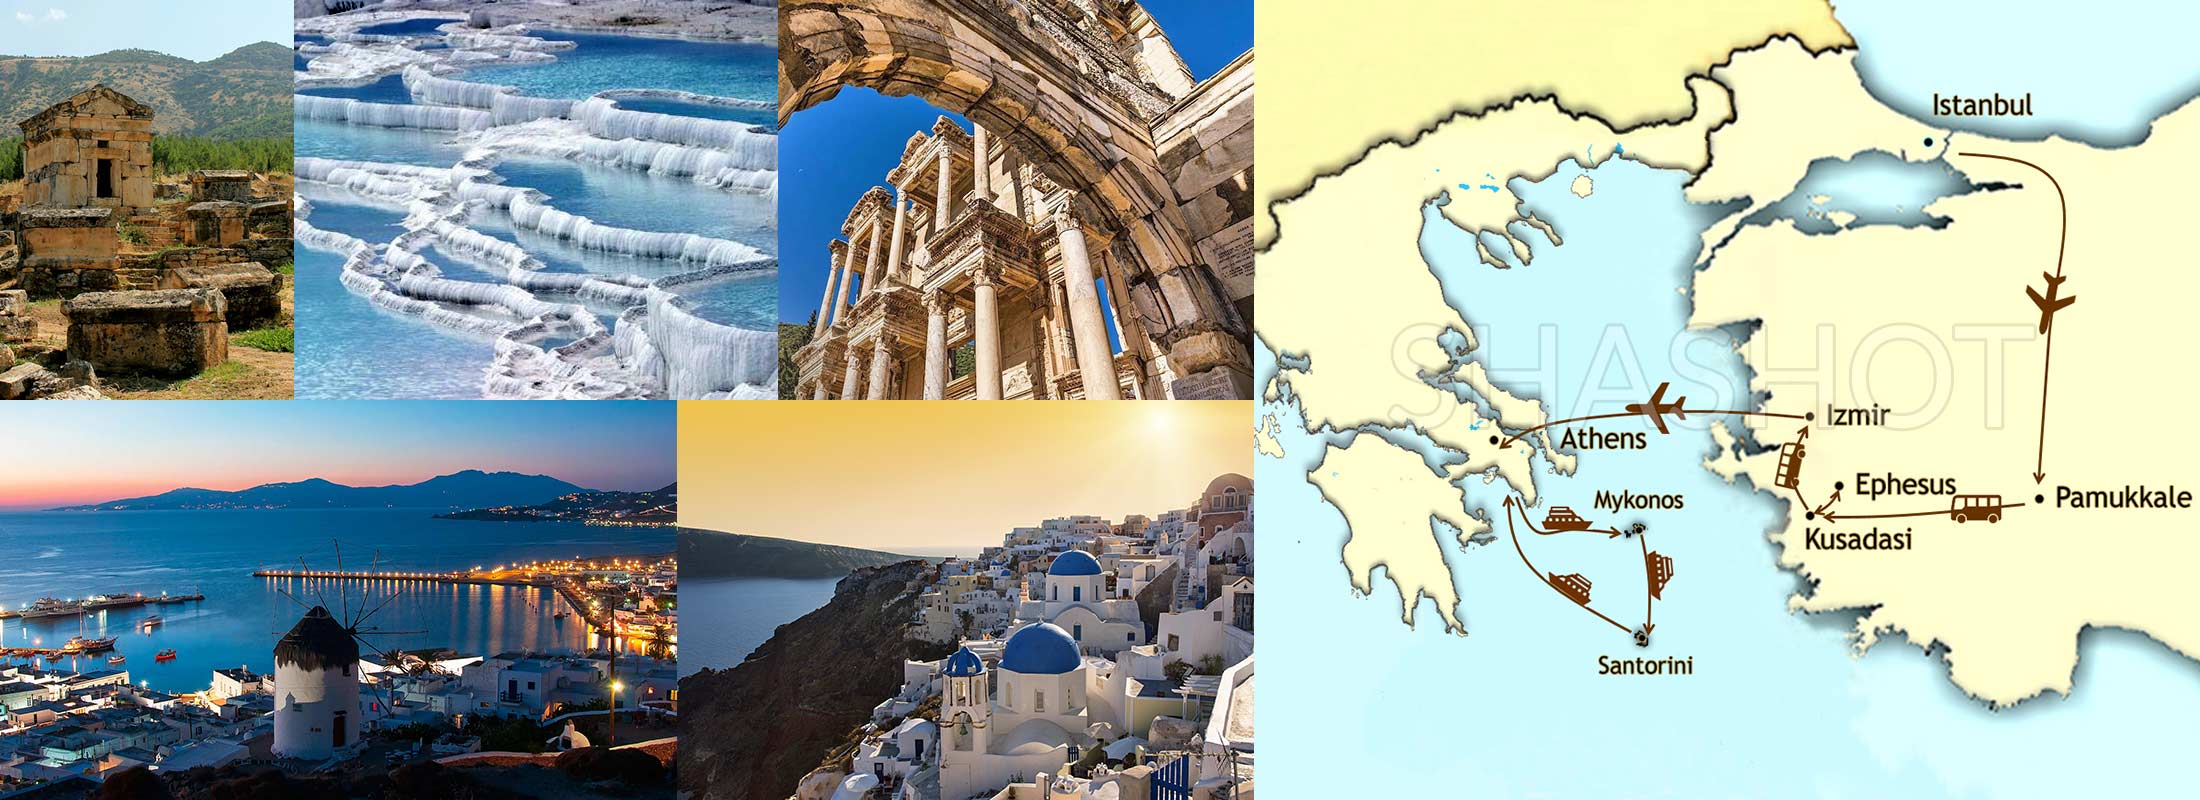 7-days-greece-turkey-package-tours-santorini-mykonos-ephesus-pamukkale-map